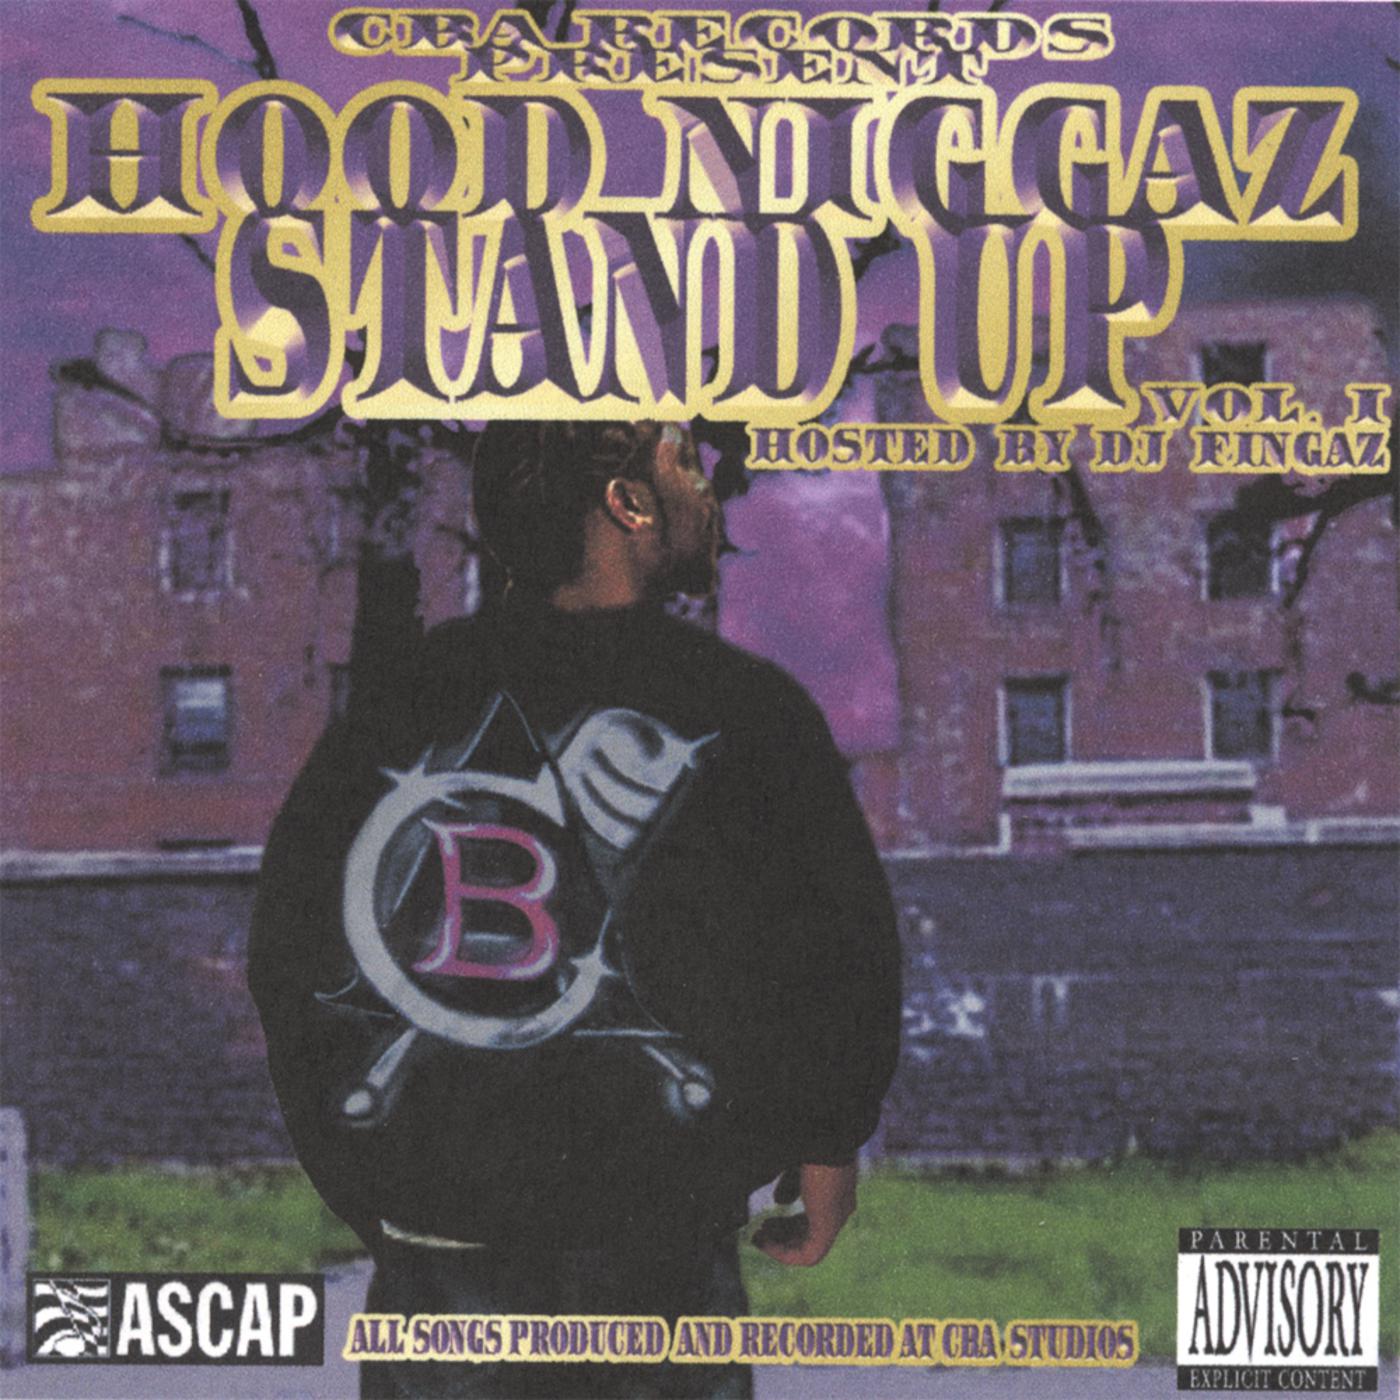 Hood Niggaz Stand Up Vol 1